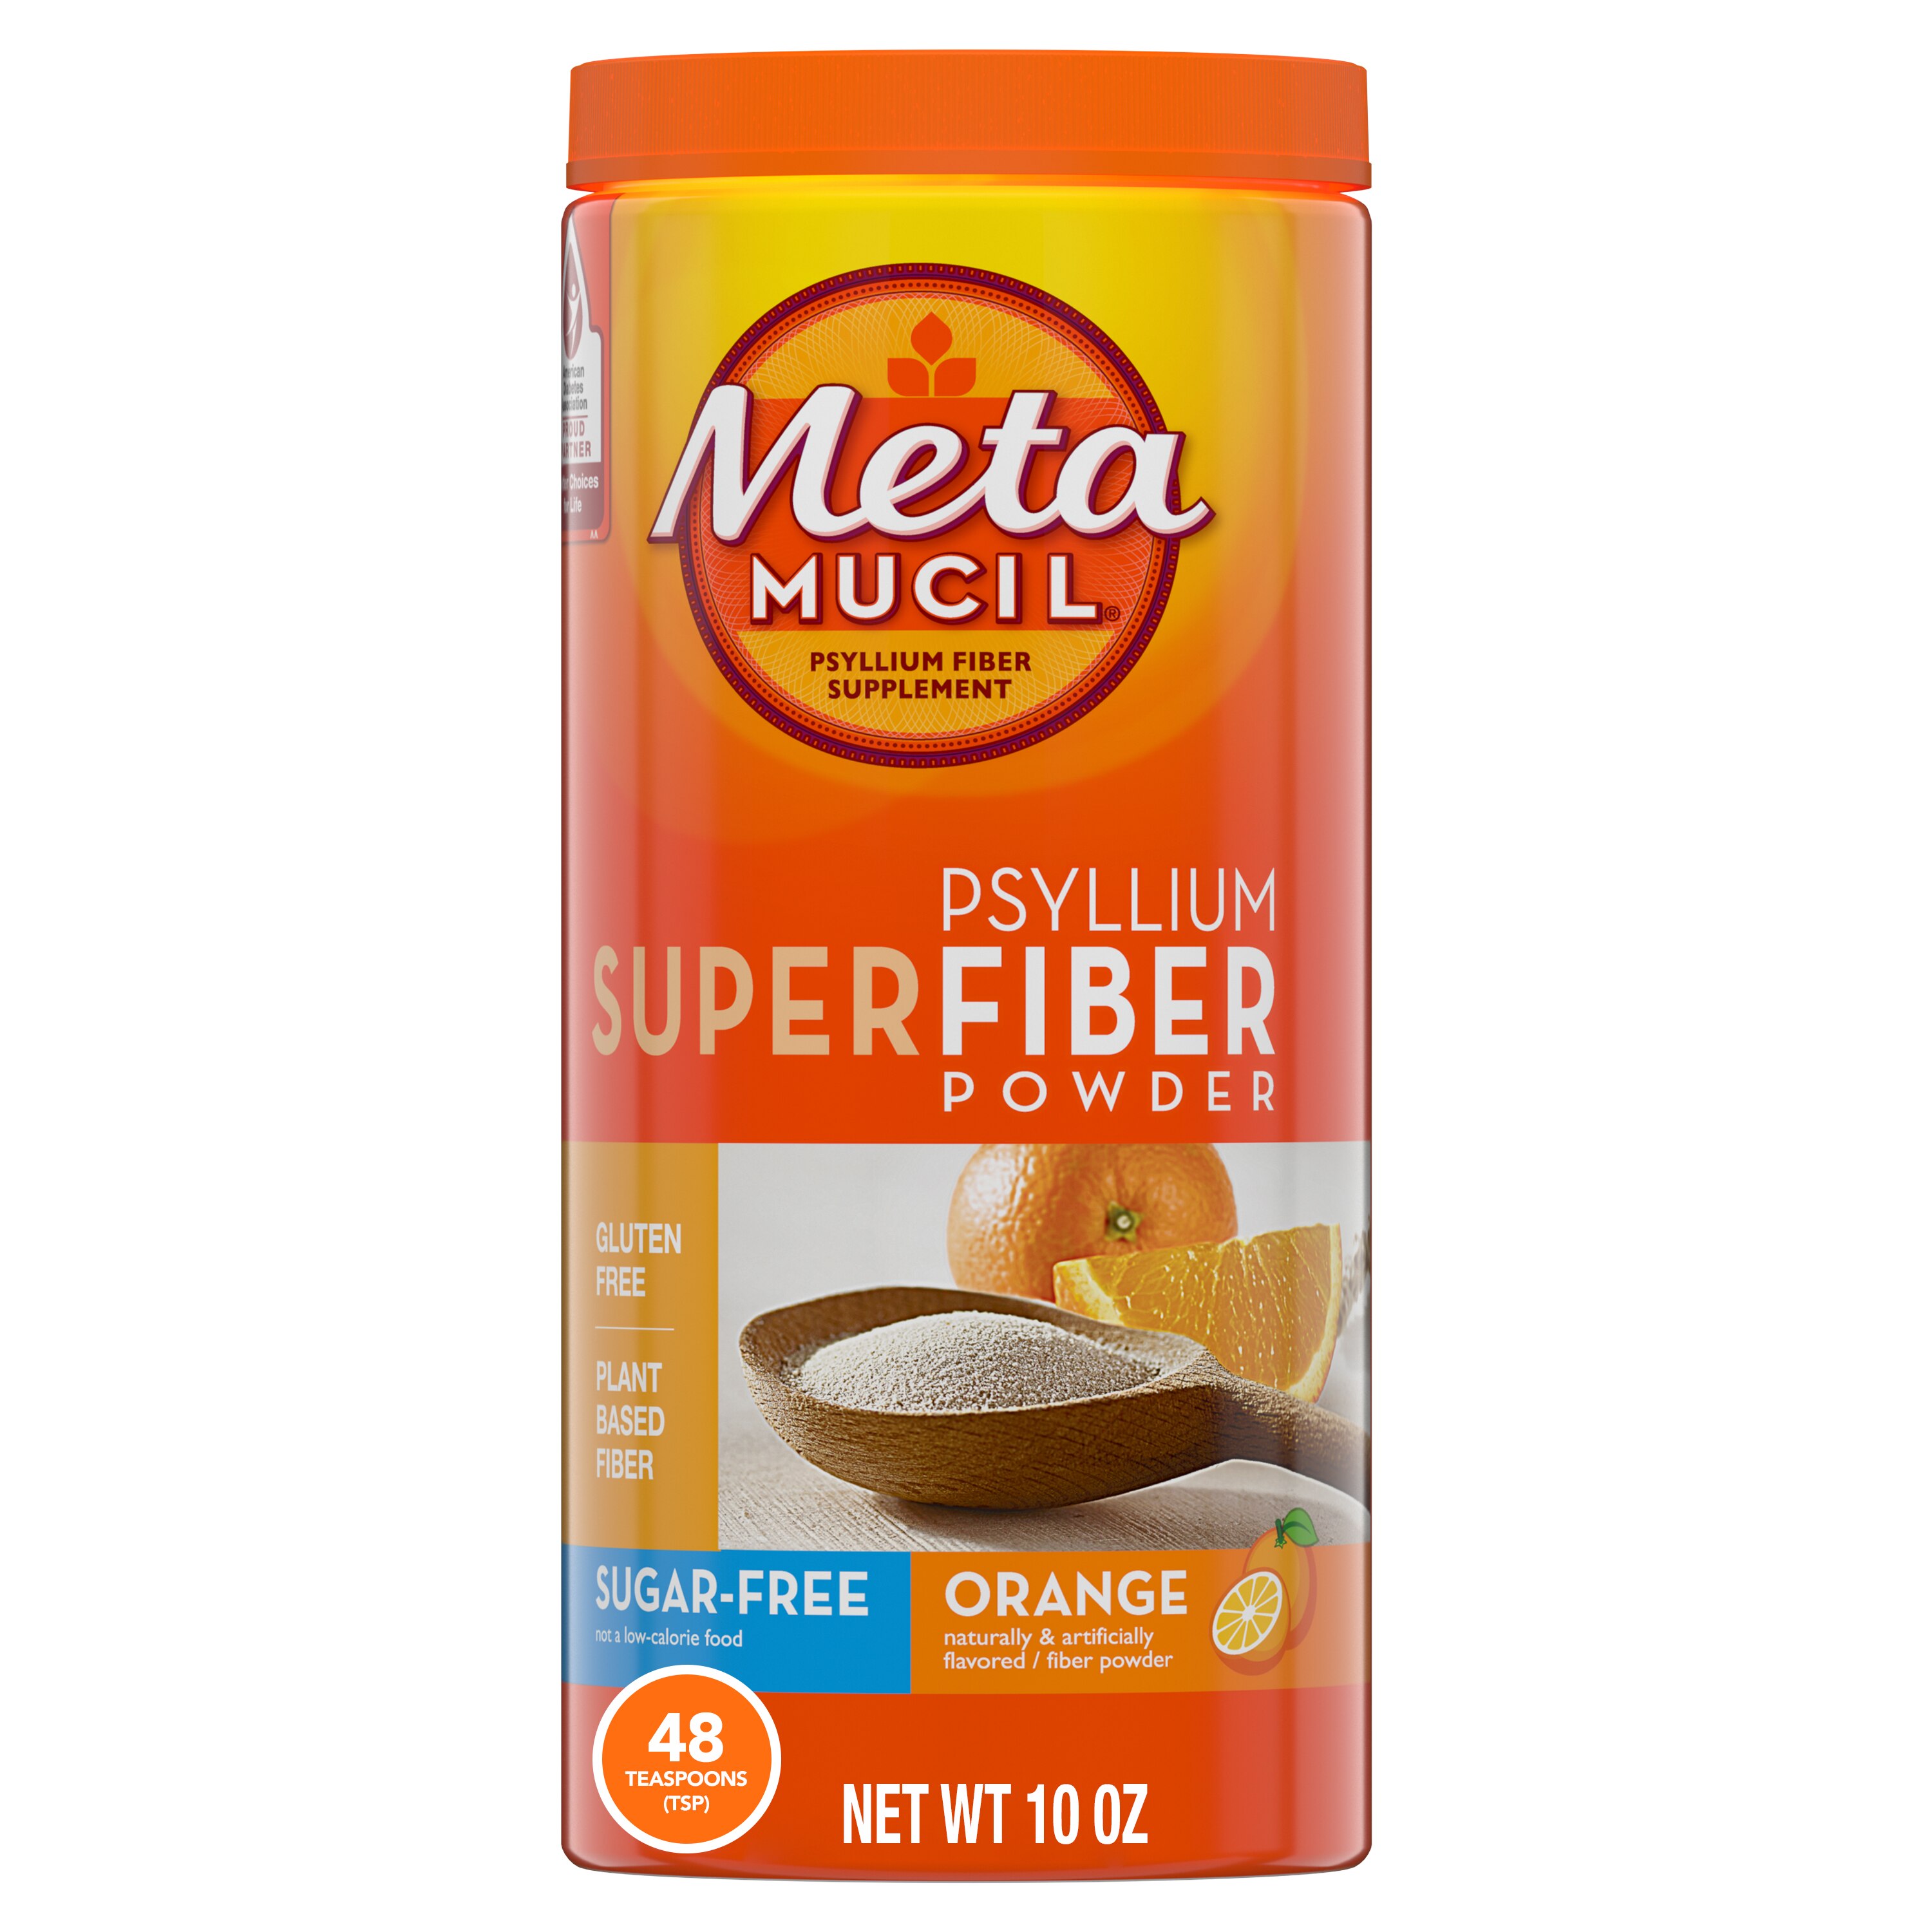 Metamucil SuperFiber Supplement Powder, Gluten Free and Sugar Free, 100% Natural Psyllium Fiber, Orange Flavored, 48 Servings, 10 OZ